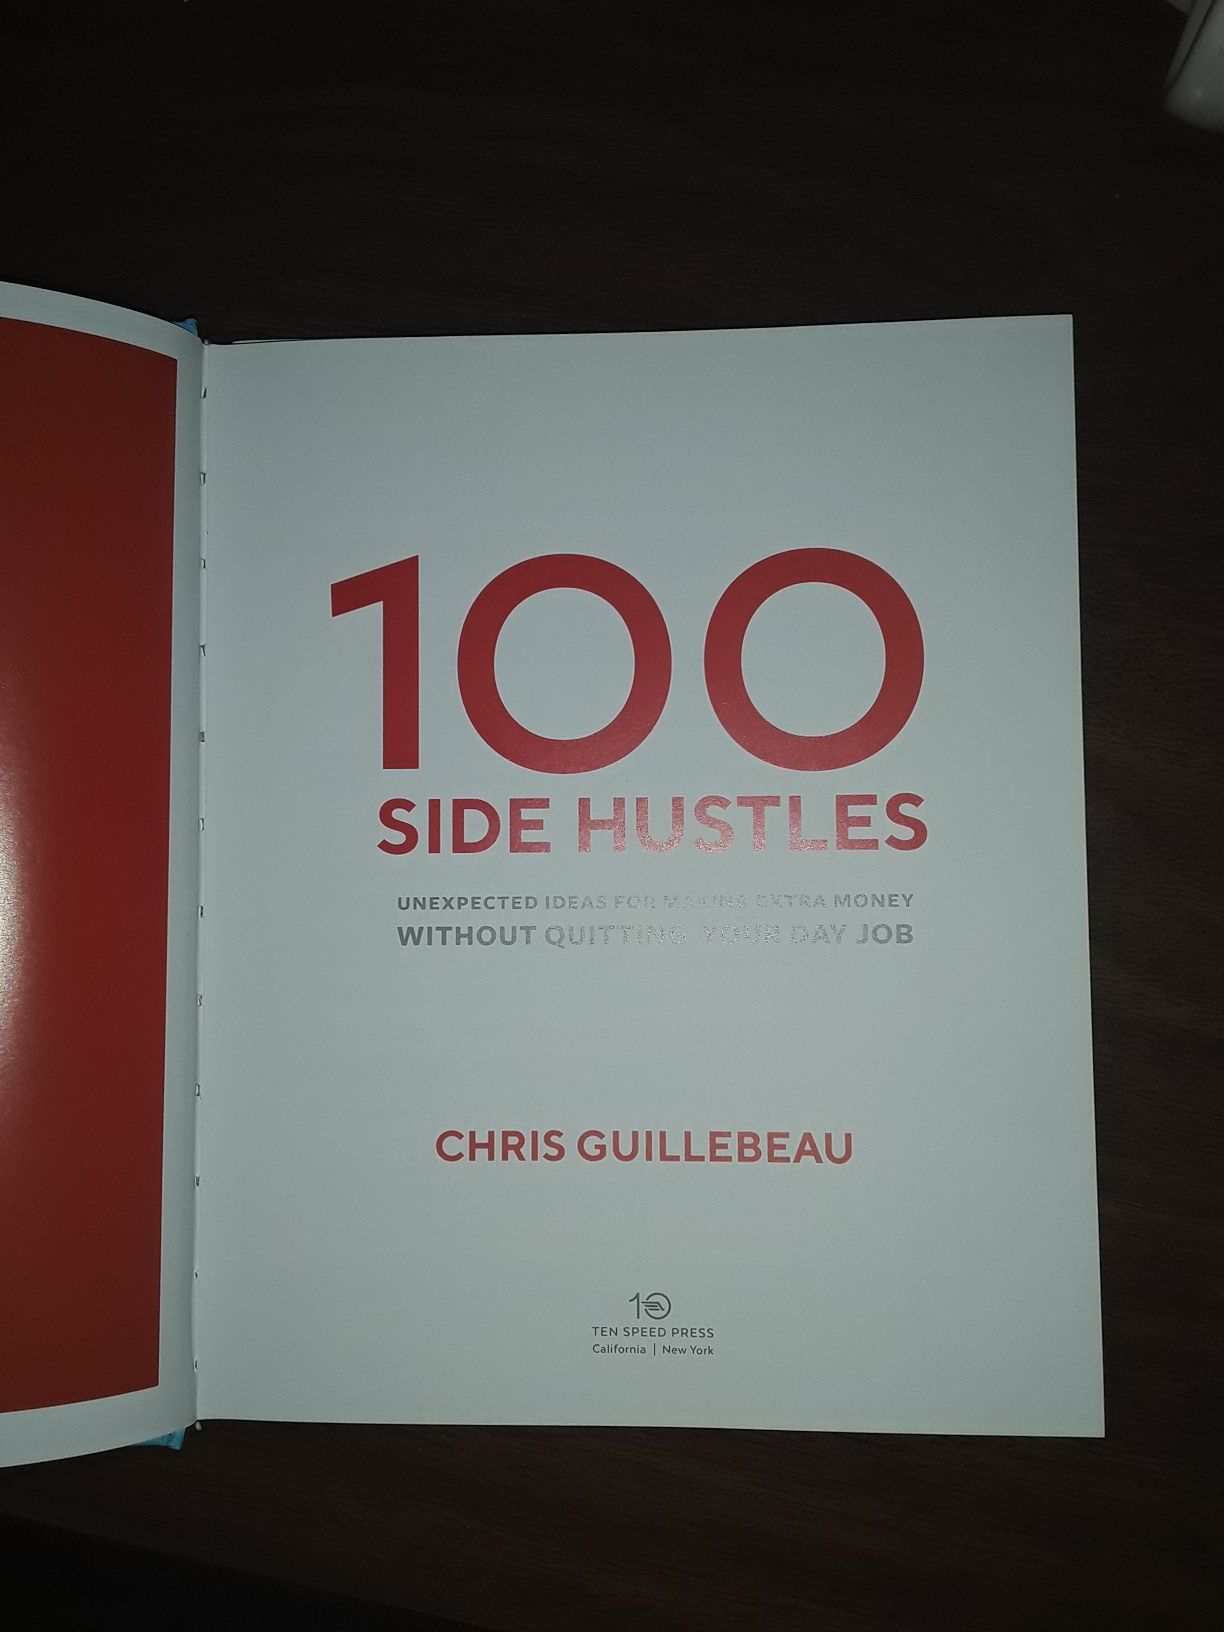 100 side hustles by Chris Guillebeau